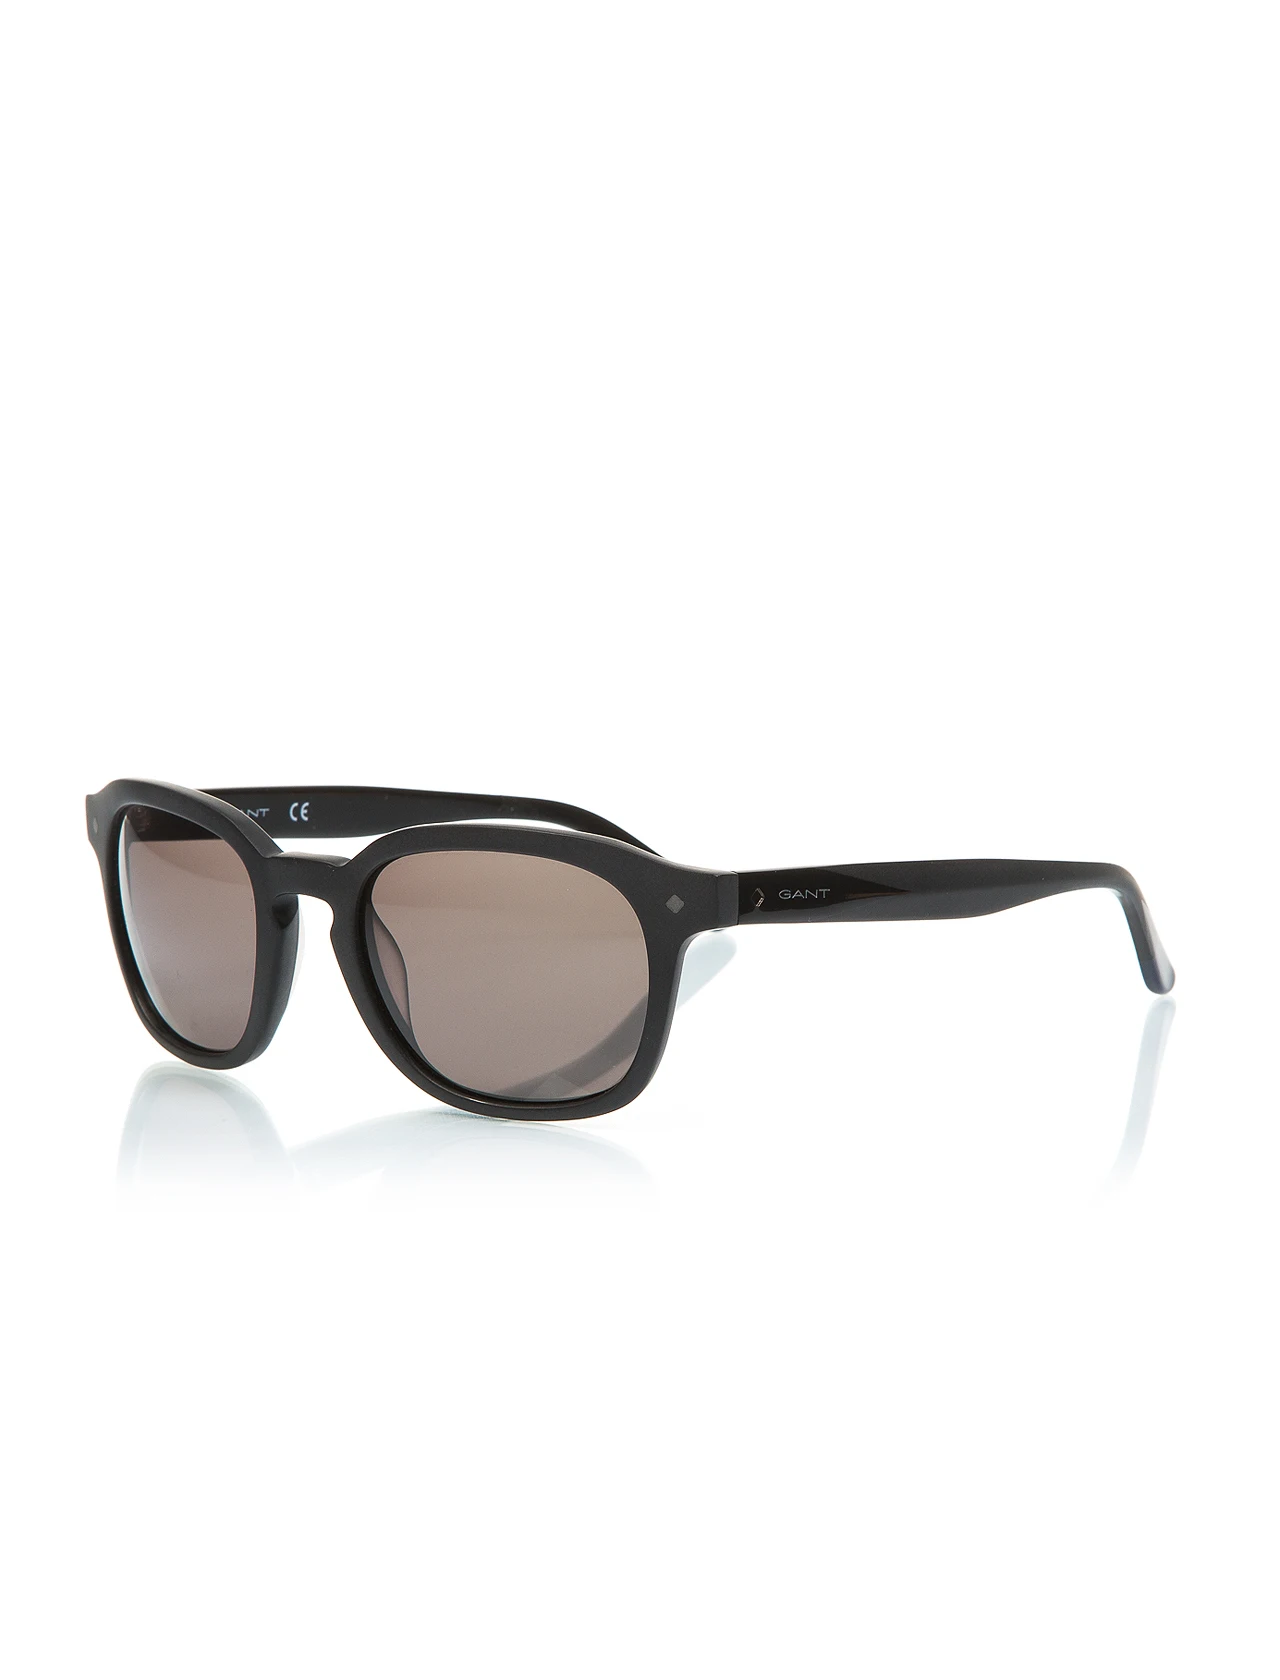 

Unisex sunglasses gnt 7040 02n bone black organic 53 -- gant